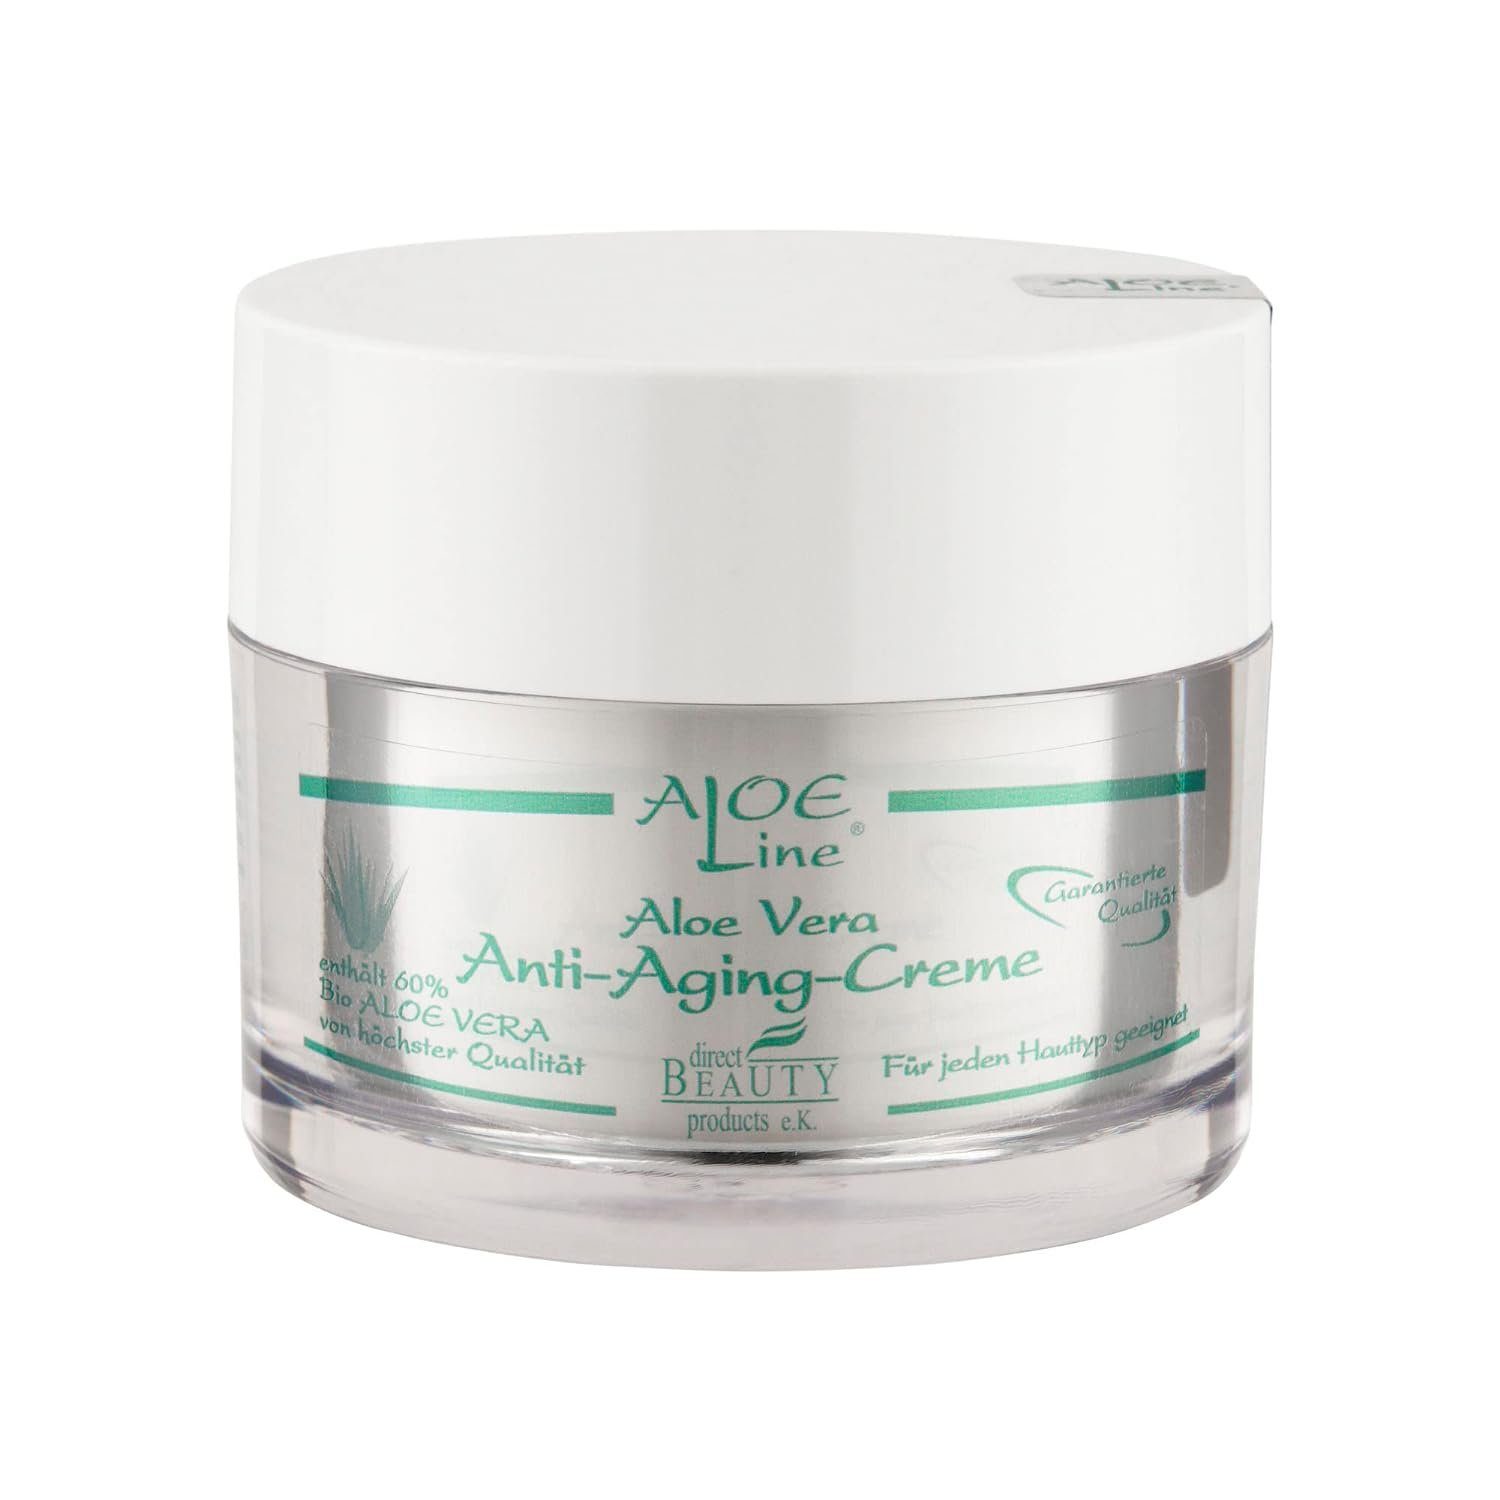 ALOE Line Anti-Aging-Creme Aloe Vera 60% Aging Bio 24h mit 50ml Gesichtscreme Aloe Anti Vera